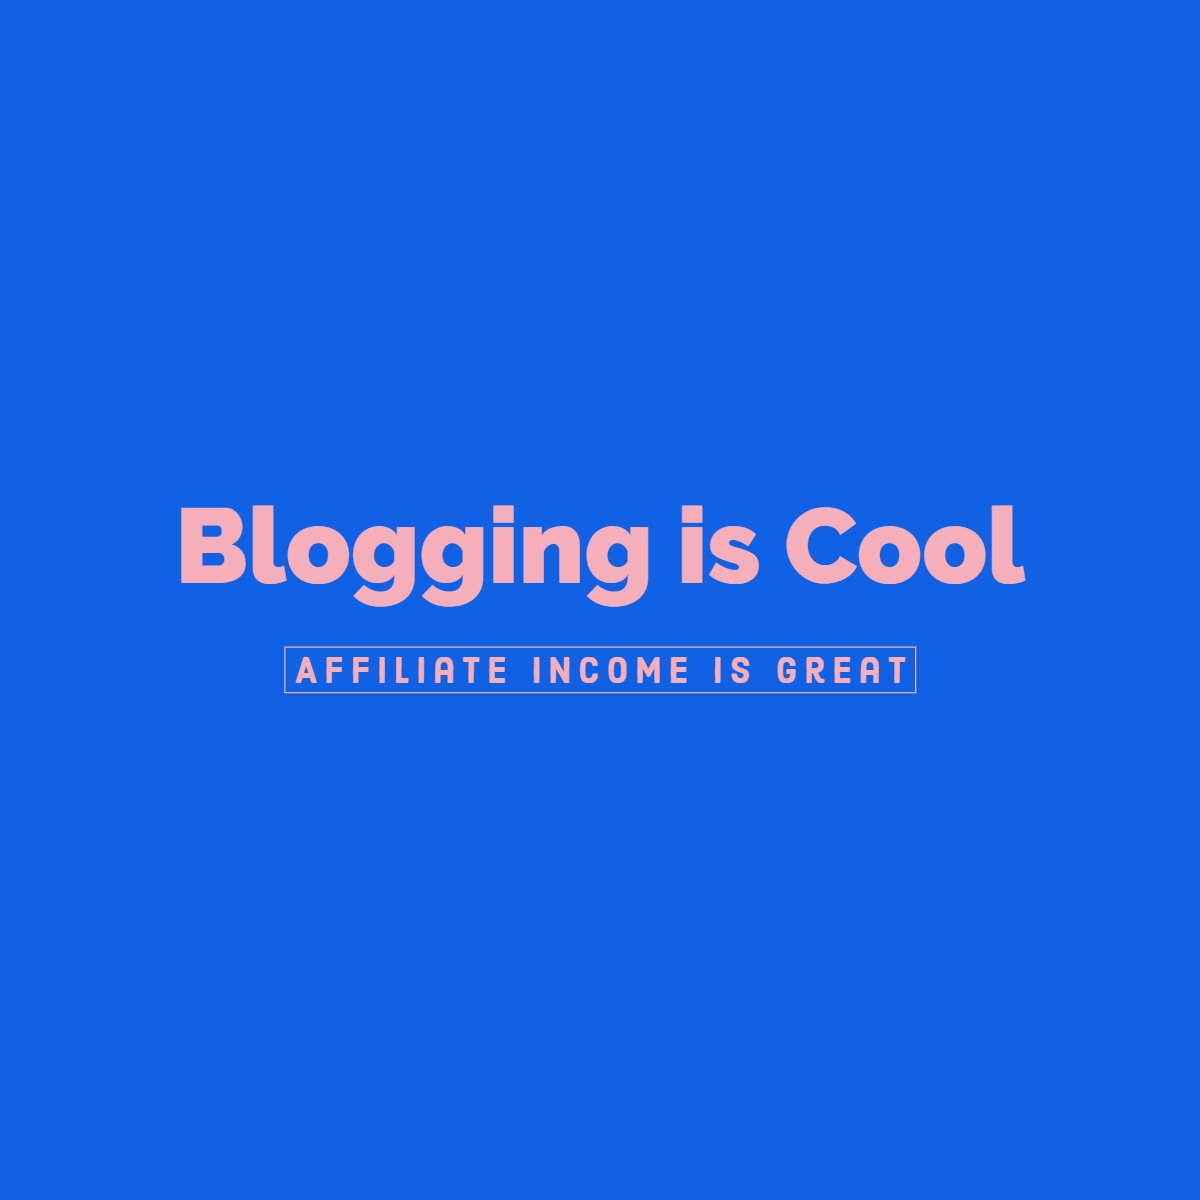 Bloggingiscool.com Revitalizing Old Blog Posts to Enhance Engagement and Visibility